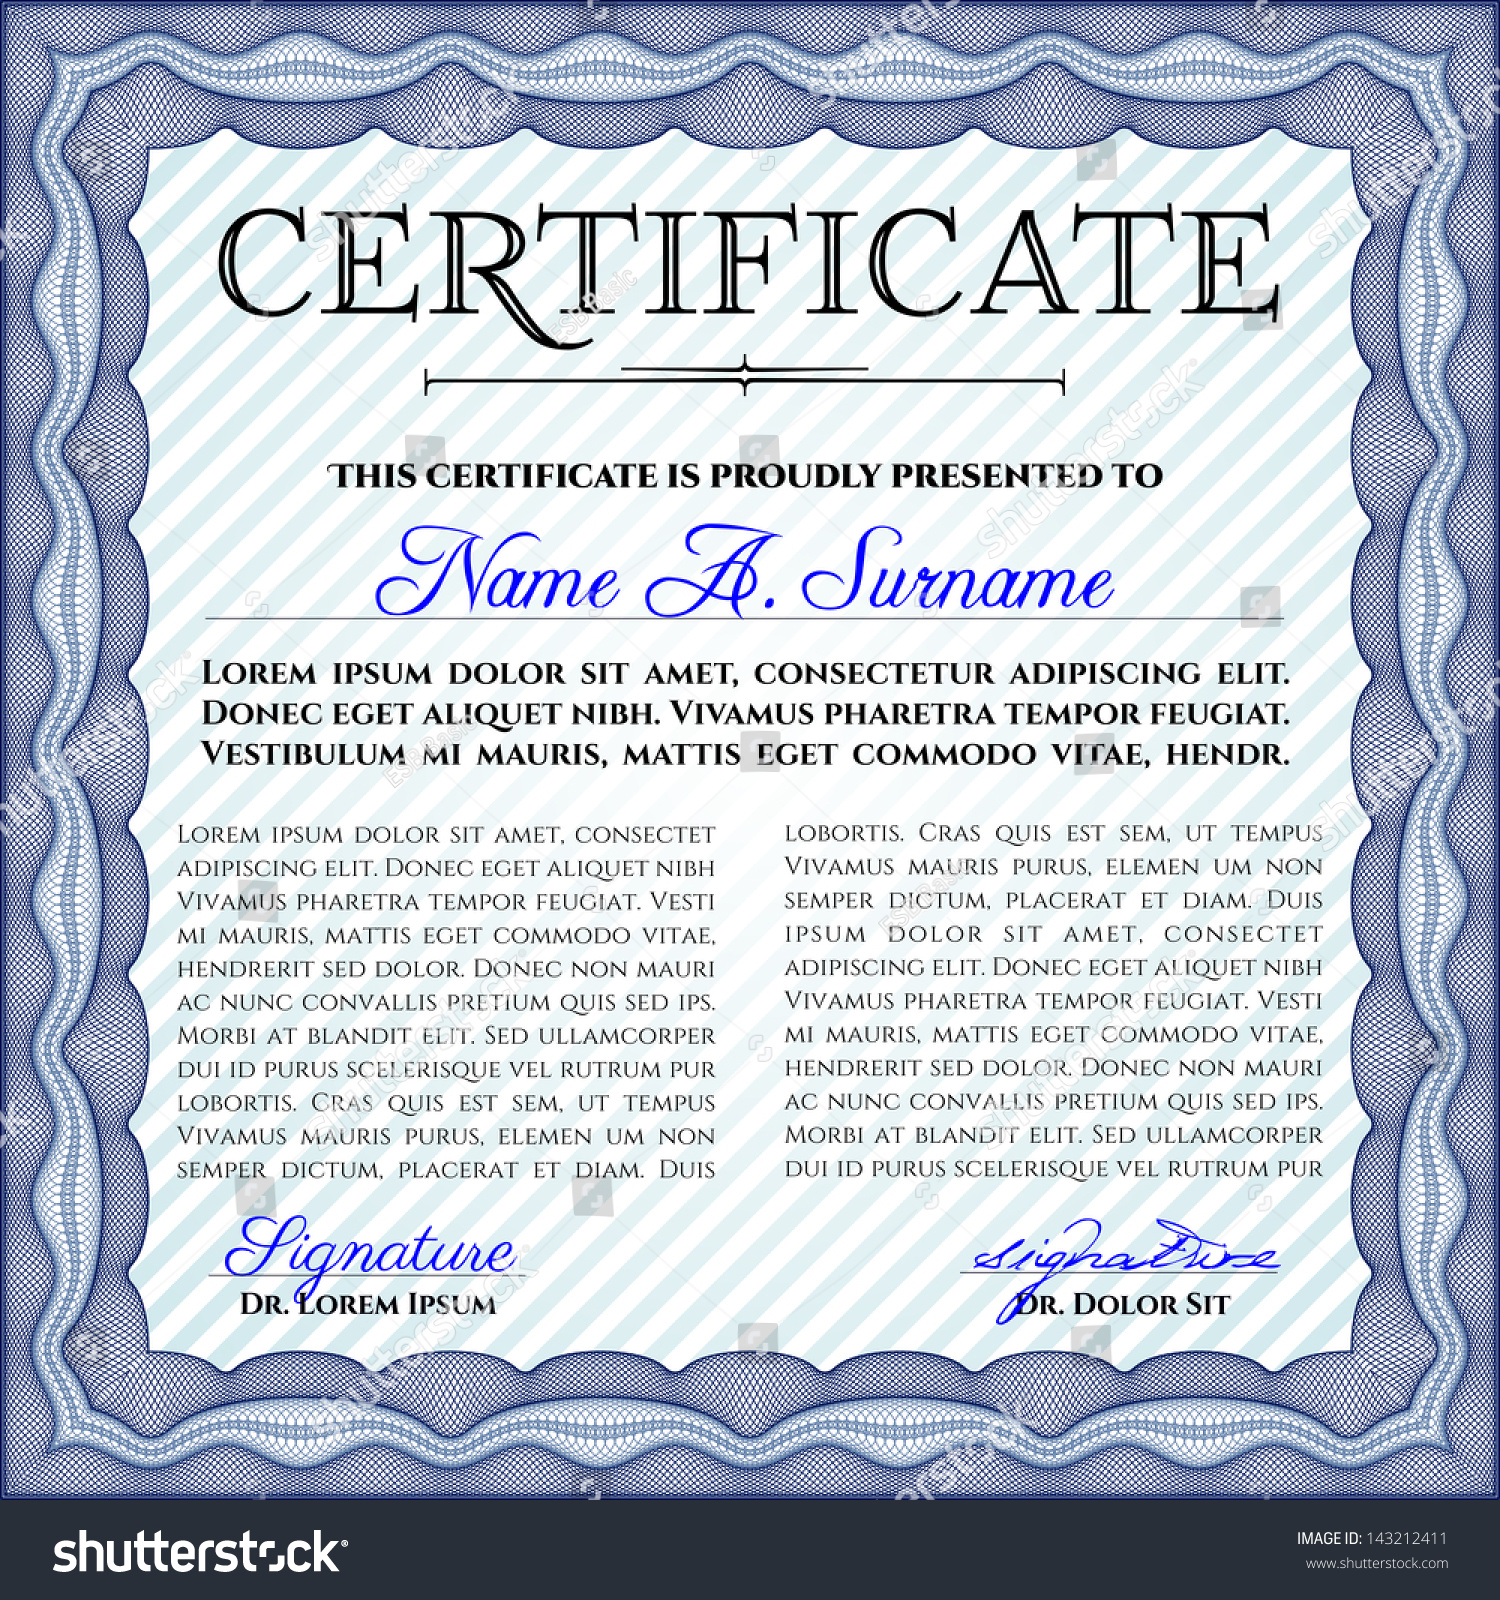 Vector Illustration Of Detailed Certificate - 143212411 : Shutterstock